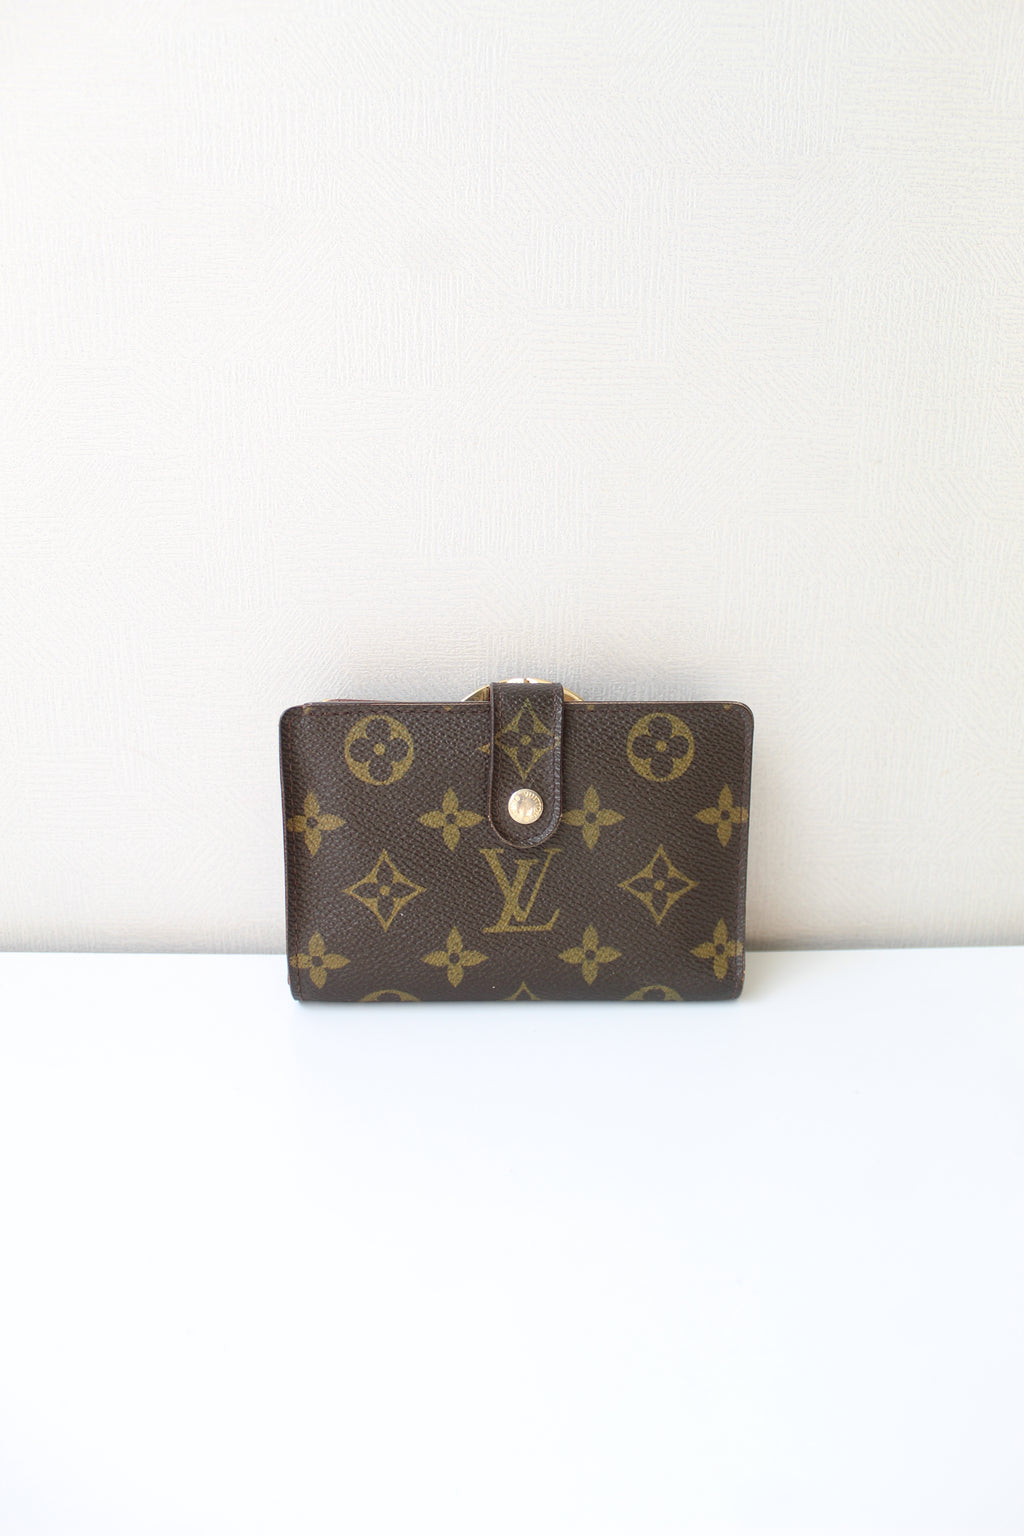 Louis Vuitton, Bags, Louis Vuitton Monogram French Purse Wallet